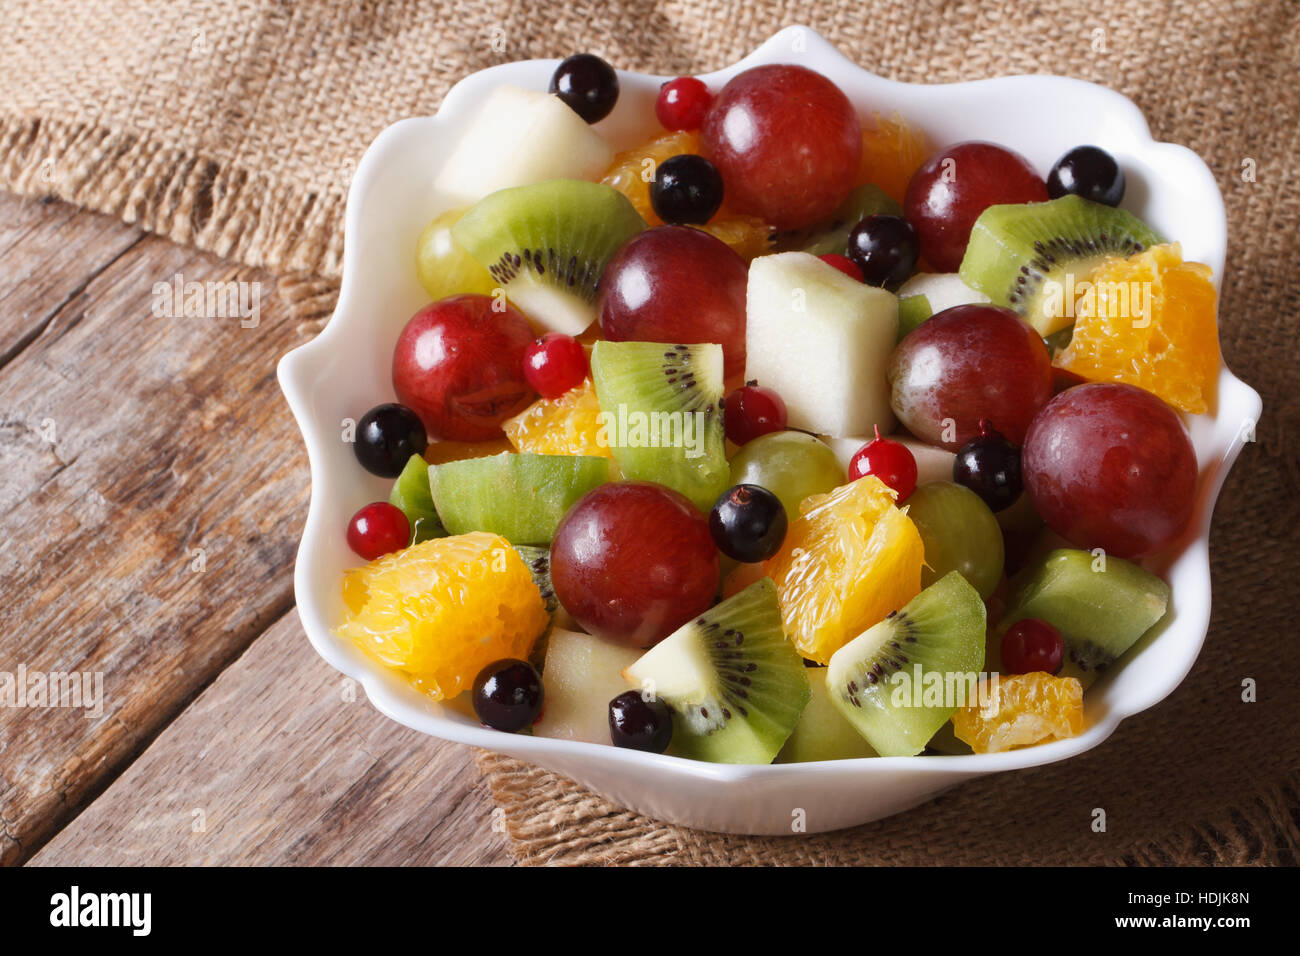 Fruit salad of oranges, grapes. pears, kiwis in a white bowl closeup. horizontal Stock Photo